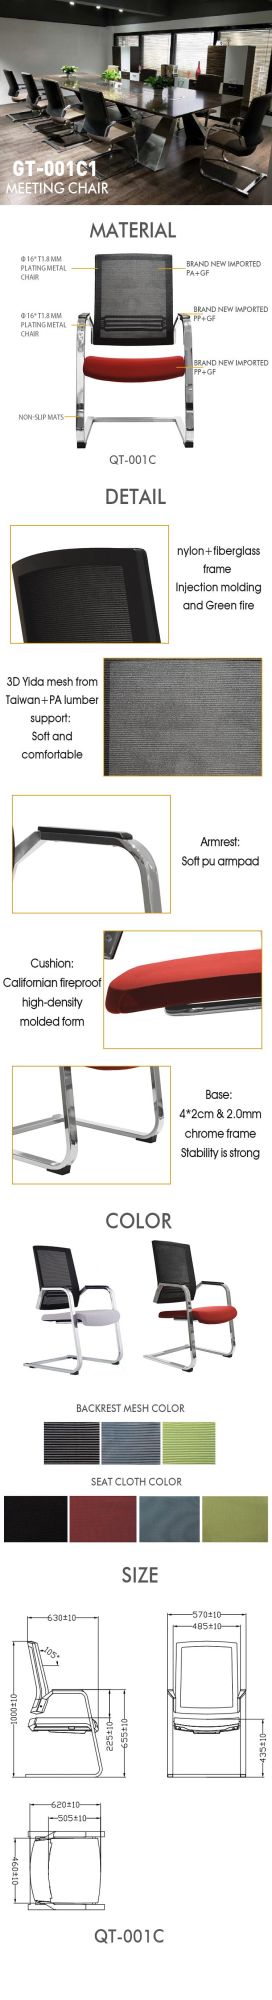 Californian Fireproof High-Density Molded Form Chrome Frame Base Meeting Chair